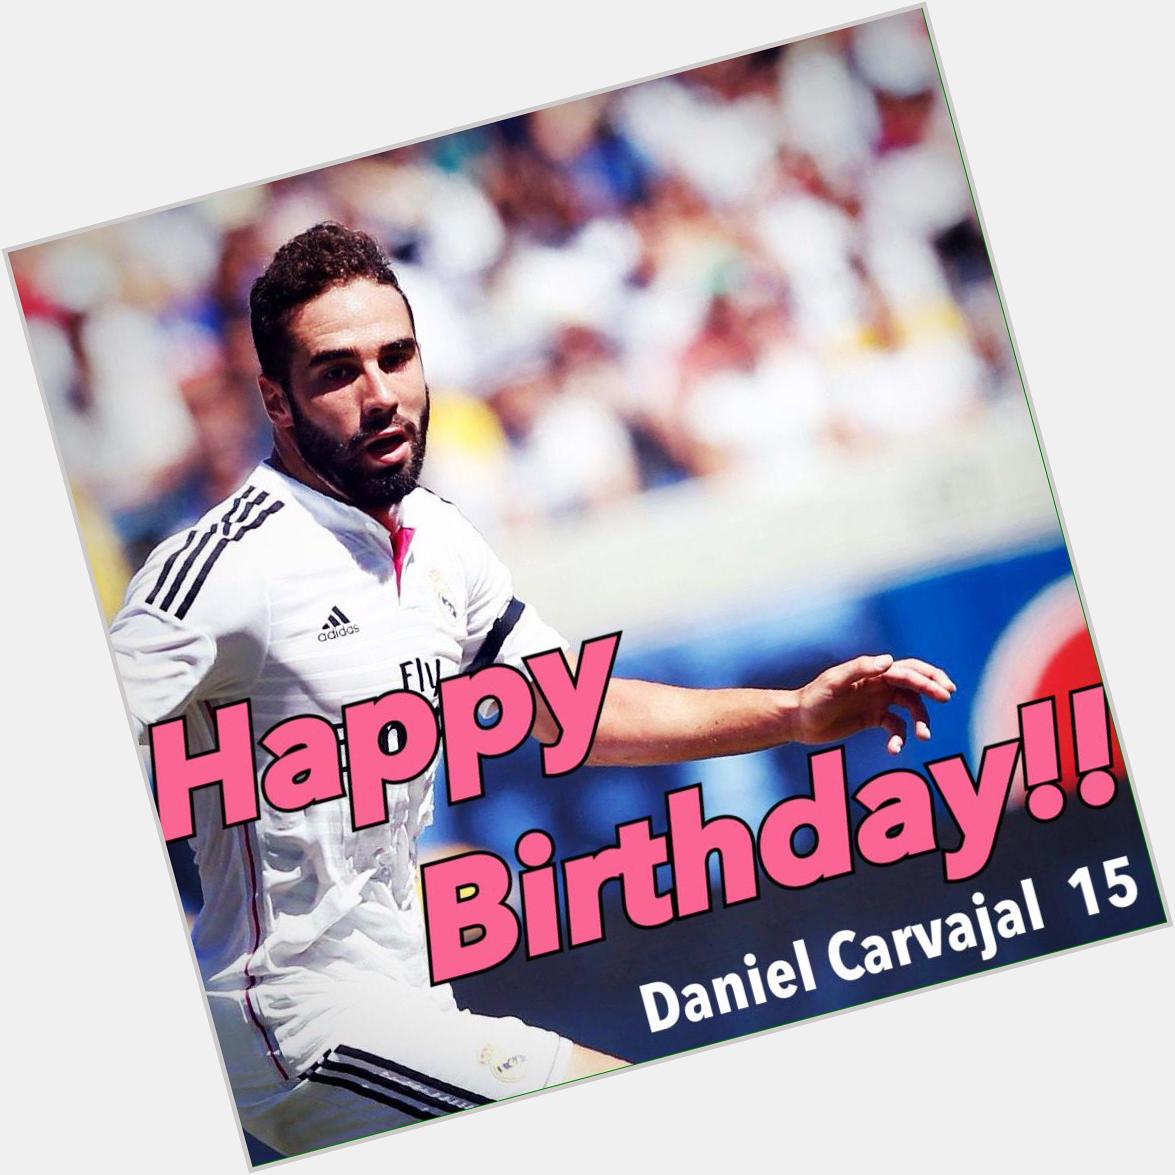 Happy birthday, Daniel Carvajal!!!!  